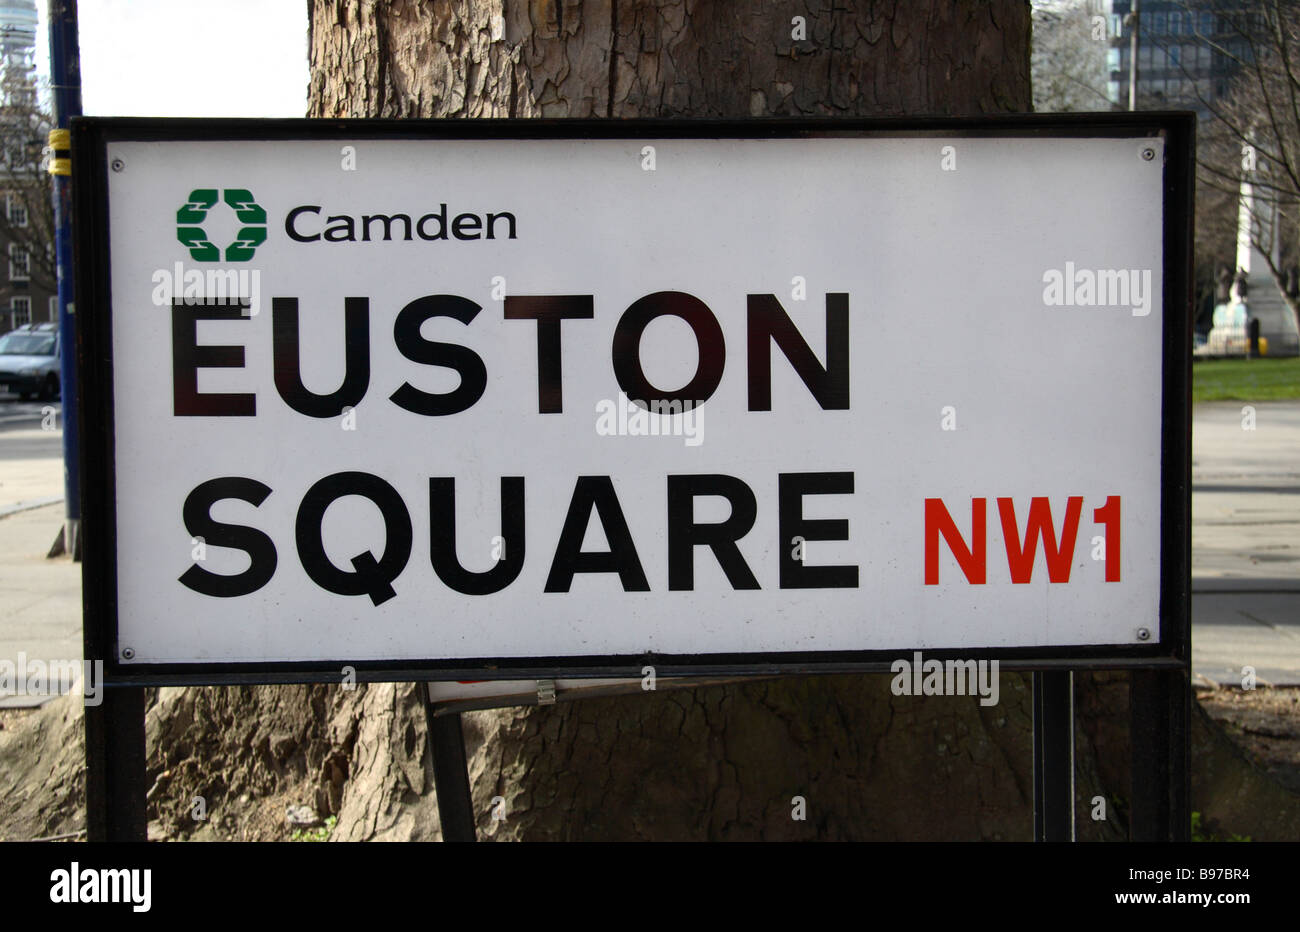 Street sign for Euston Square, London.  Mar 2009 Stock Photo